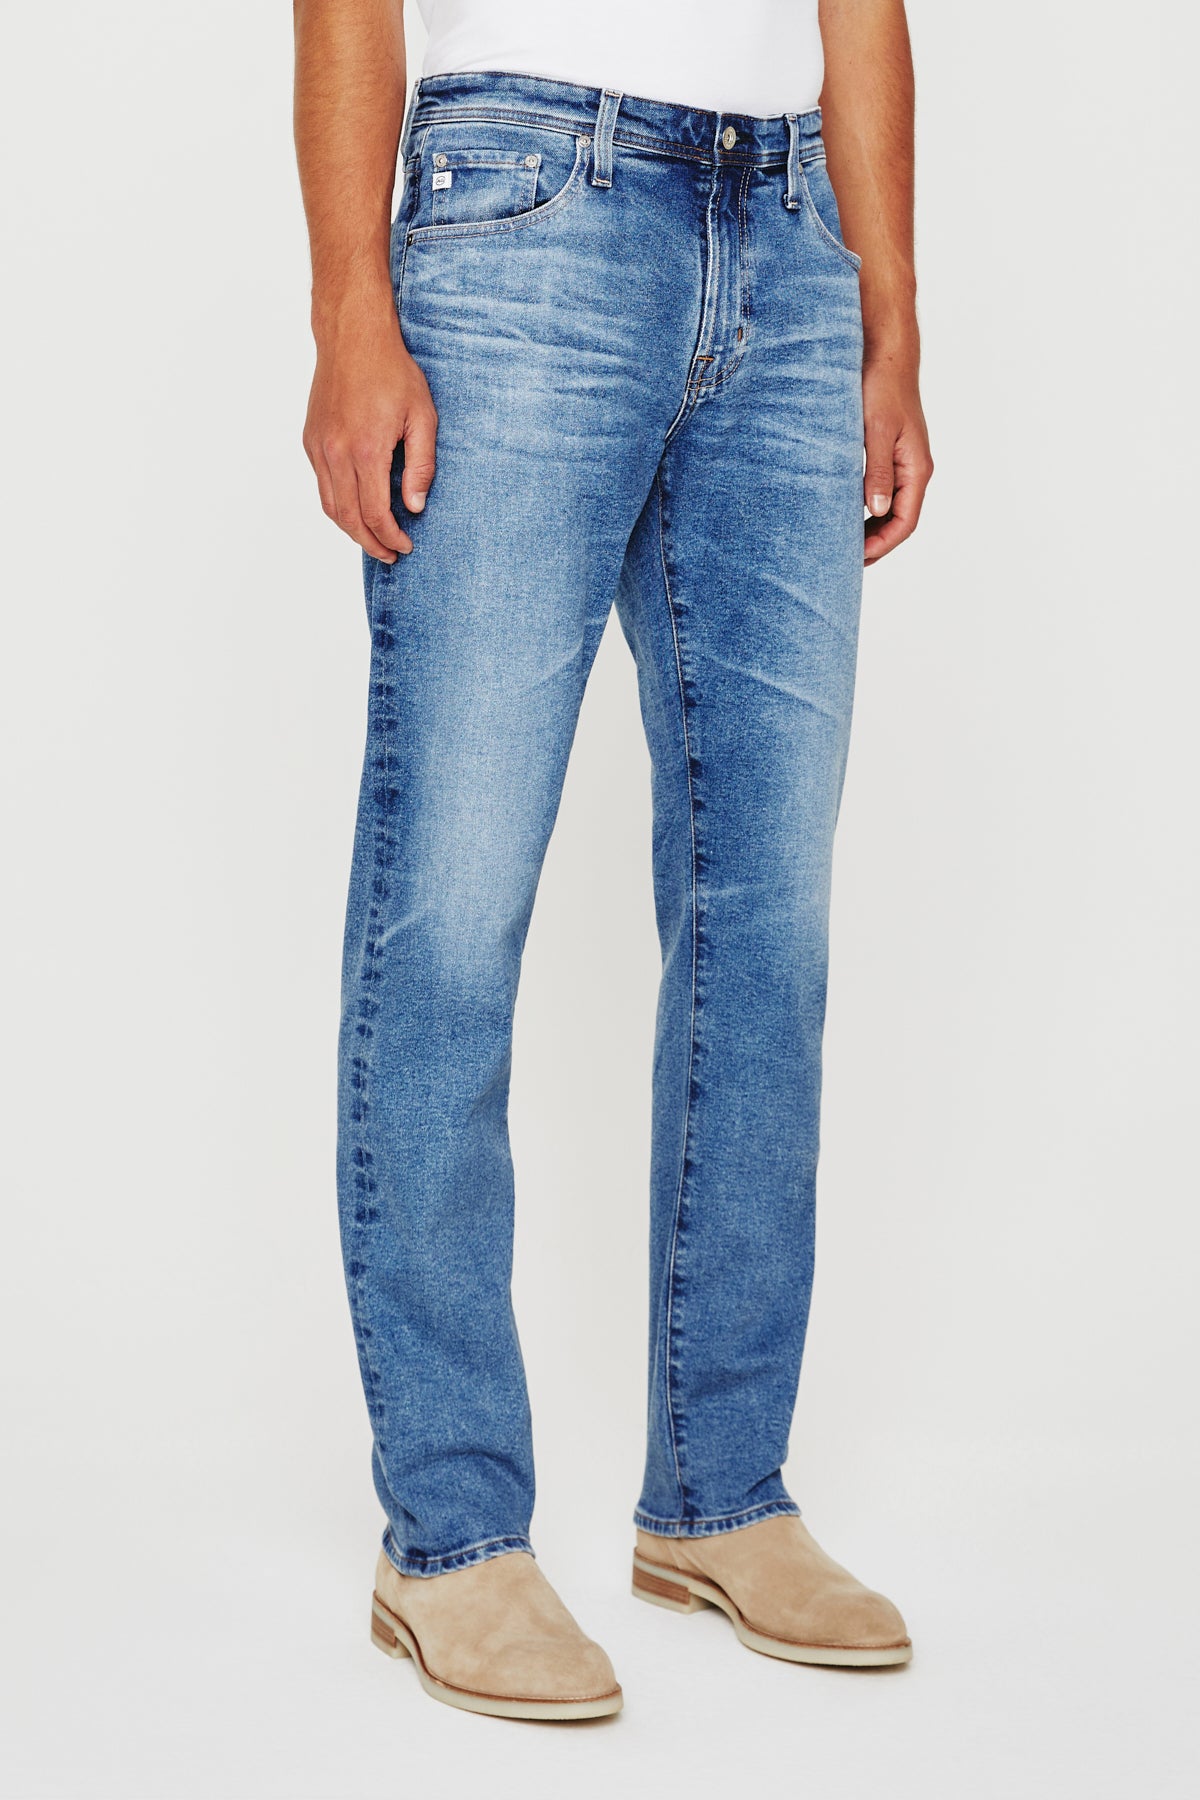 ag jeans dylan slim fit jean in vp la presa blue, side view